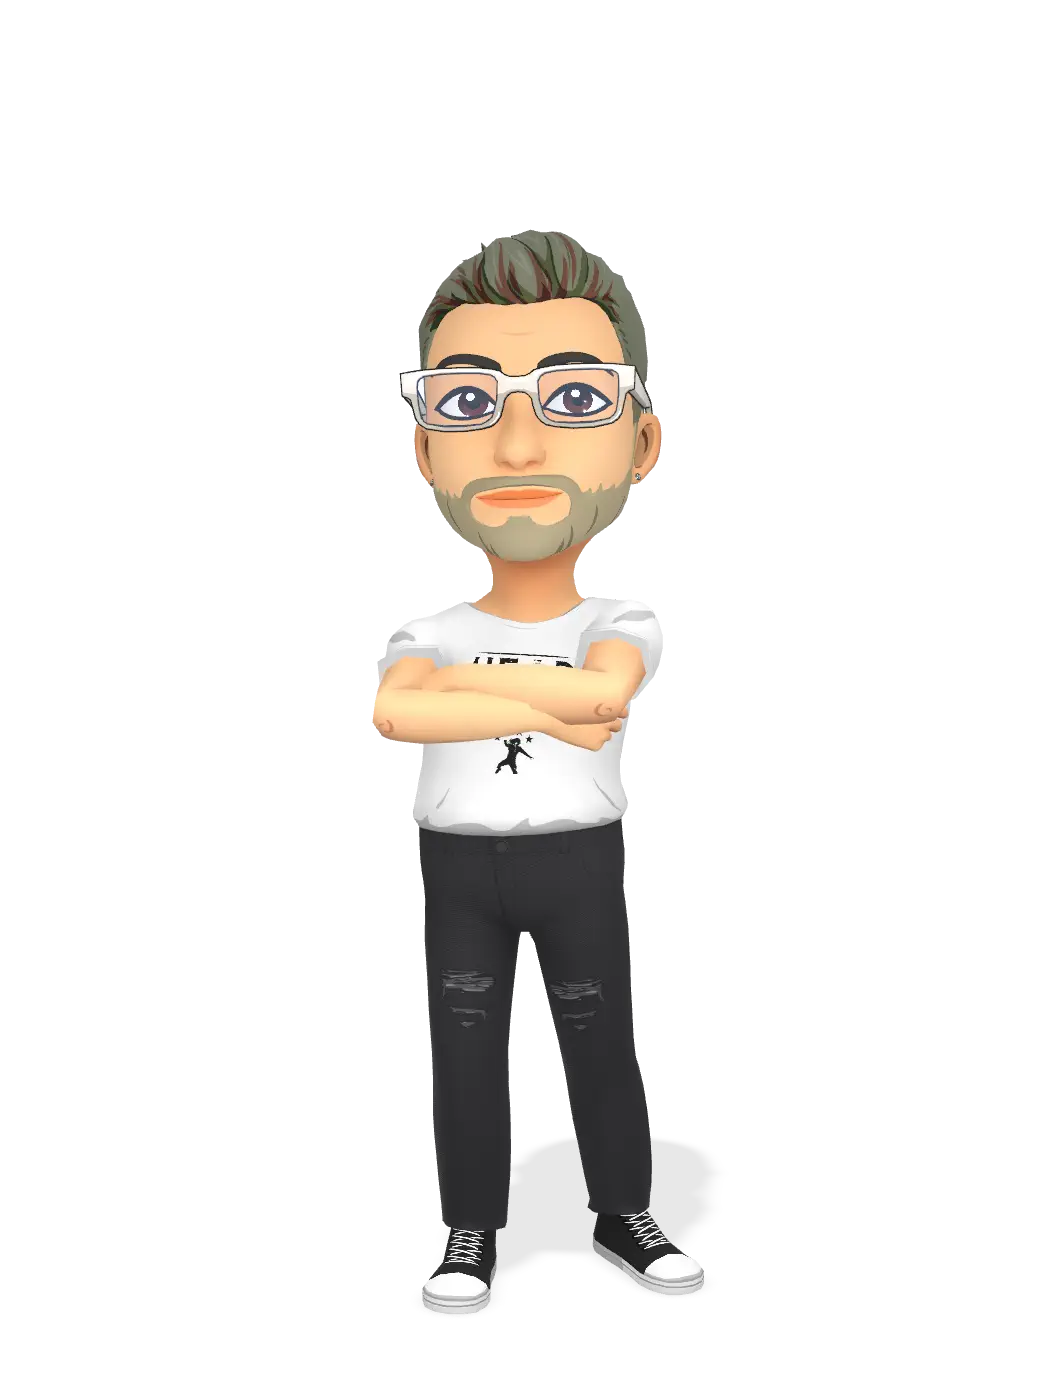 3D Bitmoji for snapdoudoune avatar